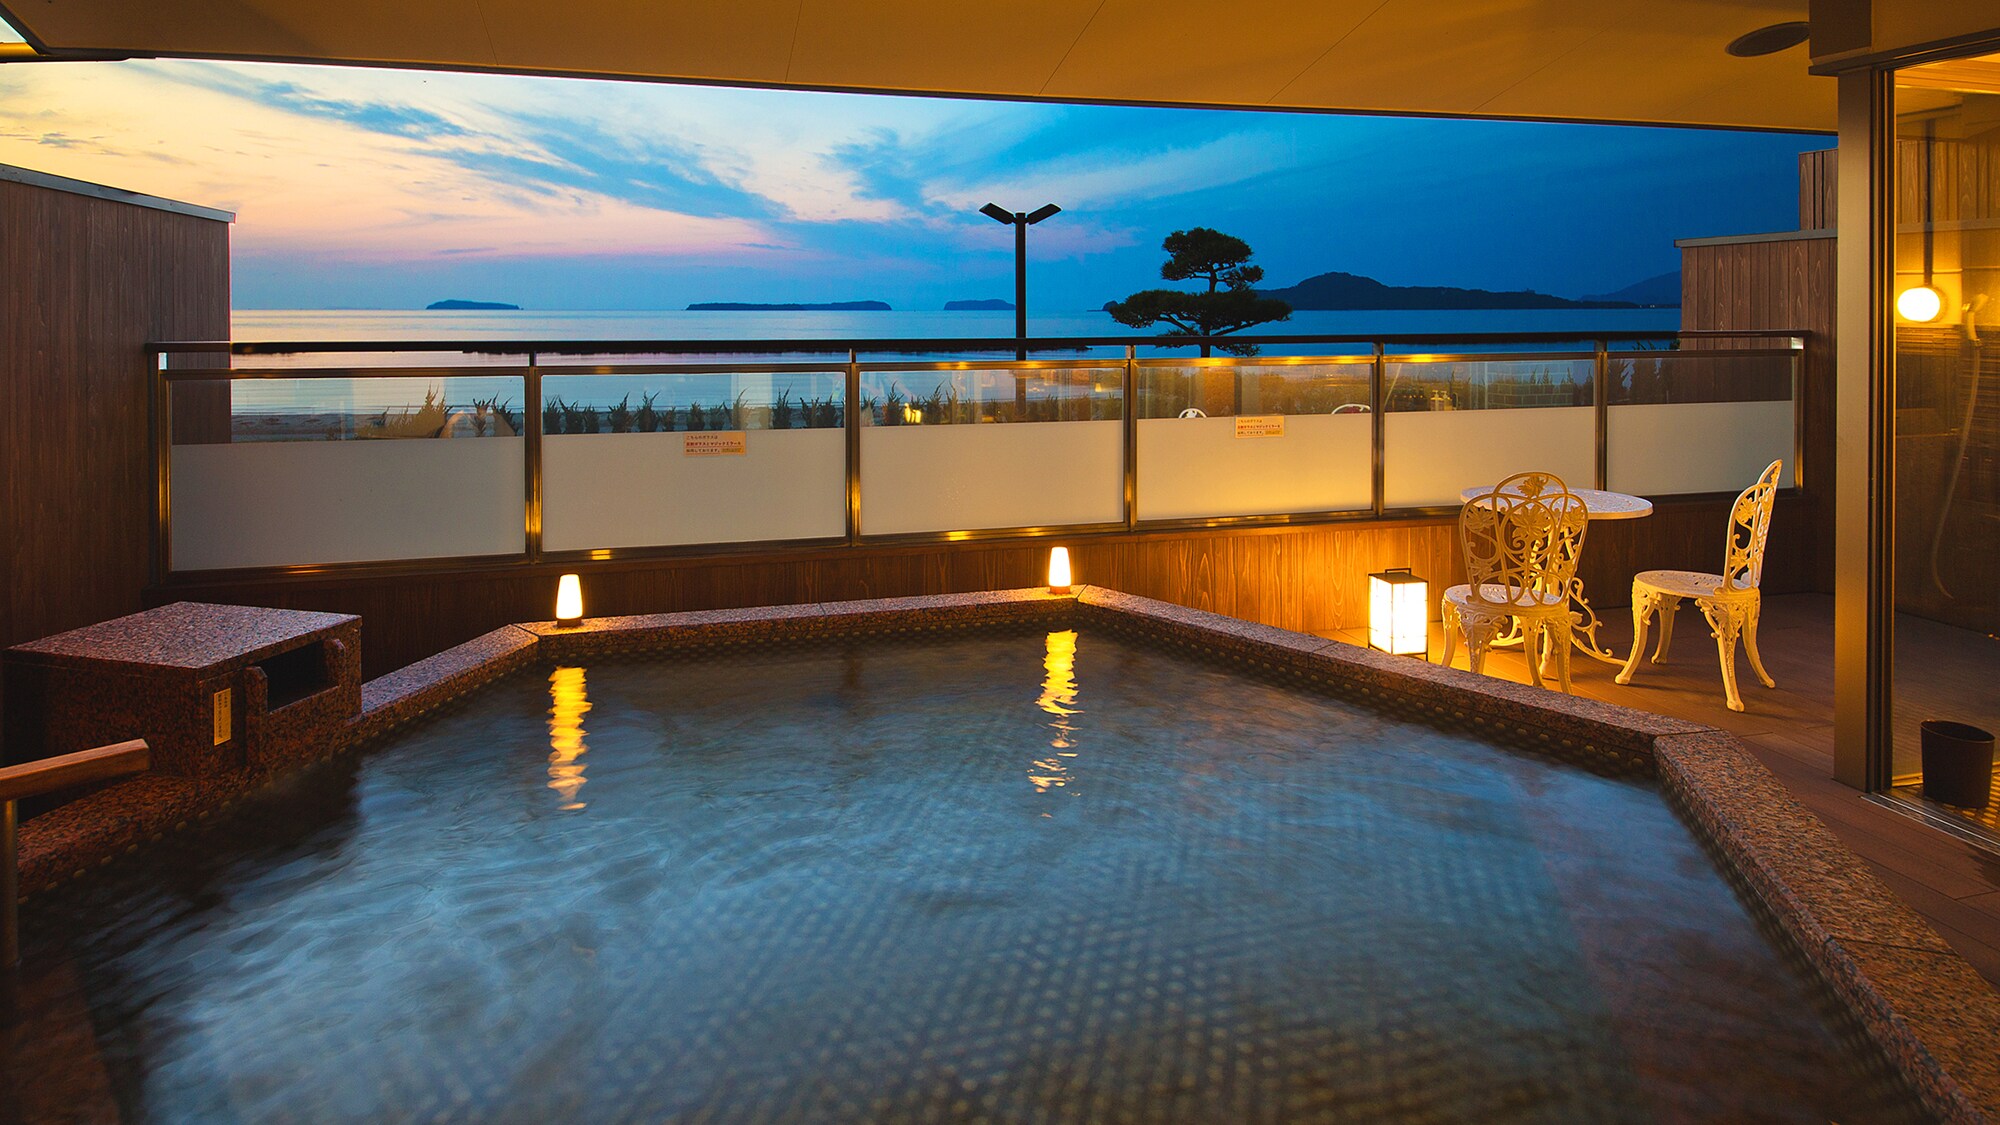 ■ Open-air bath overlooking the sea ■